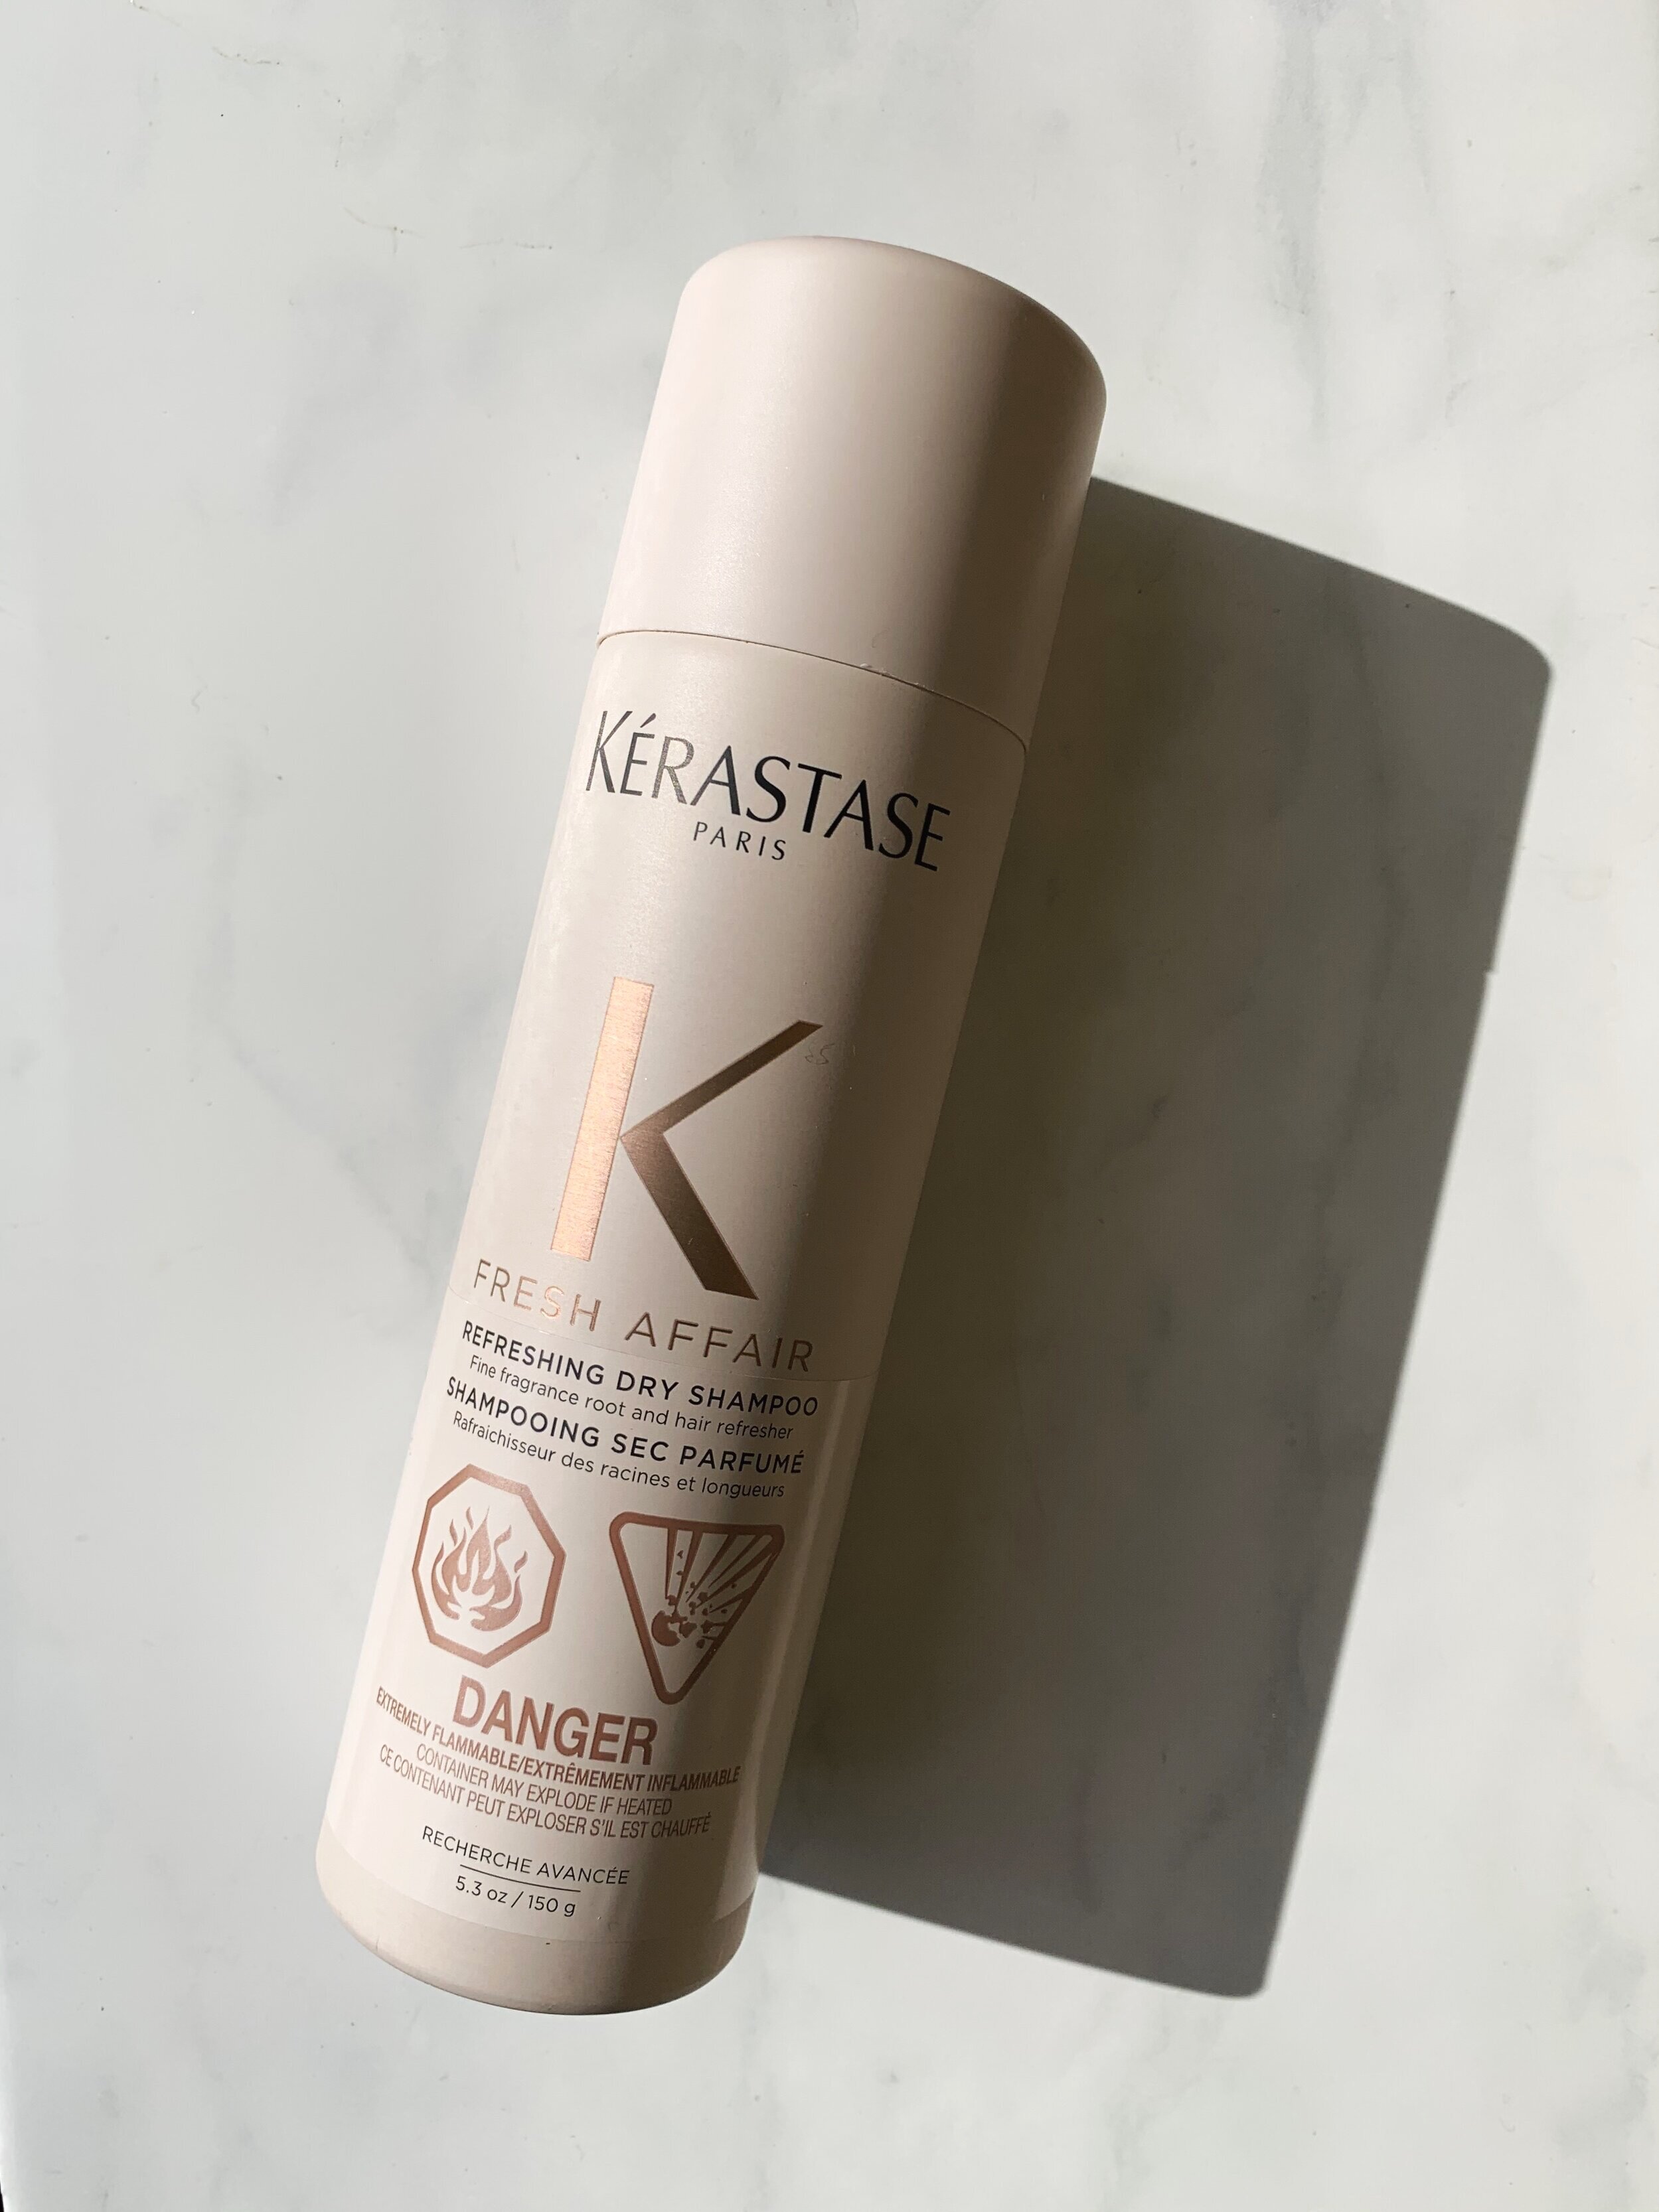 Kérastase Fresh Affair Dry Shampoo Smells Like You Moved Into a Higher Tax  Bracket — Old(ish)